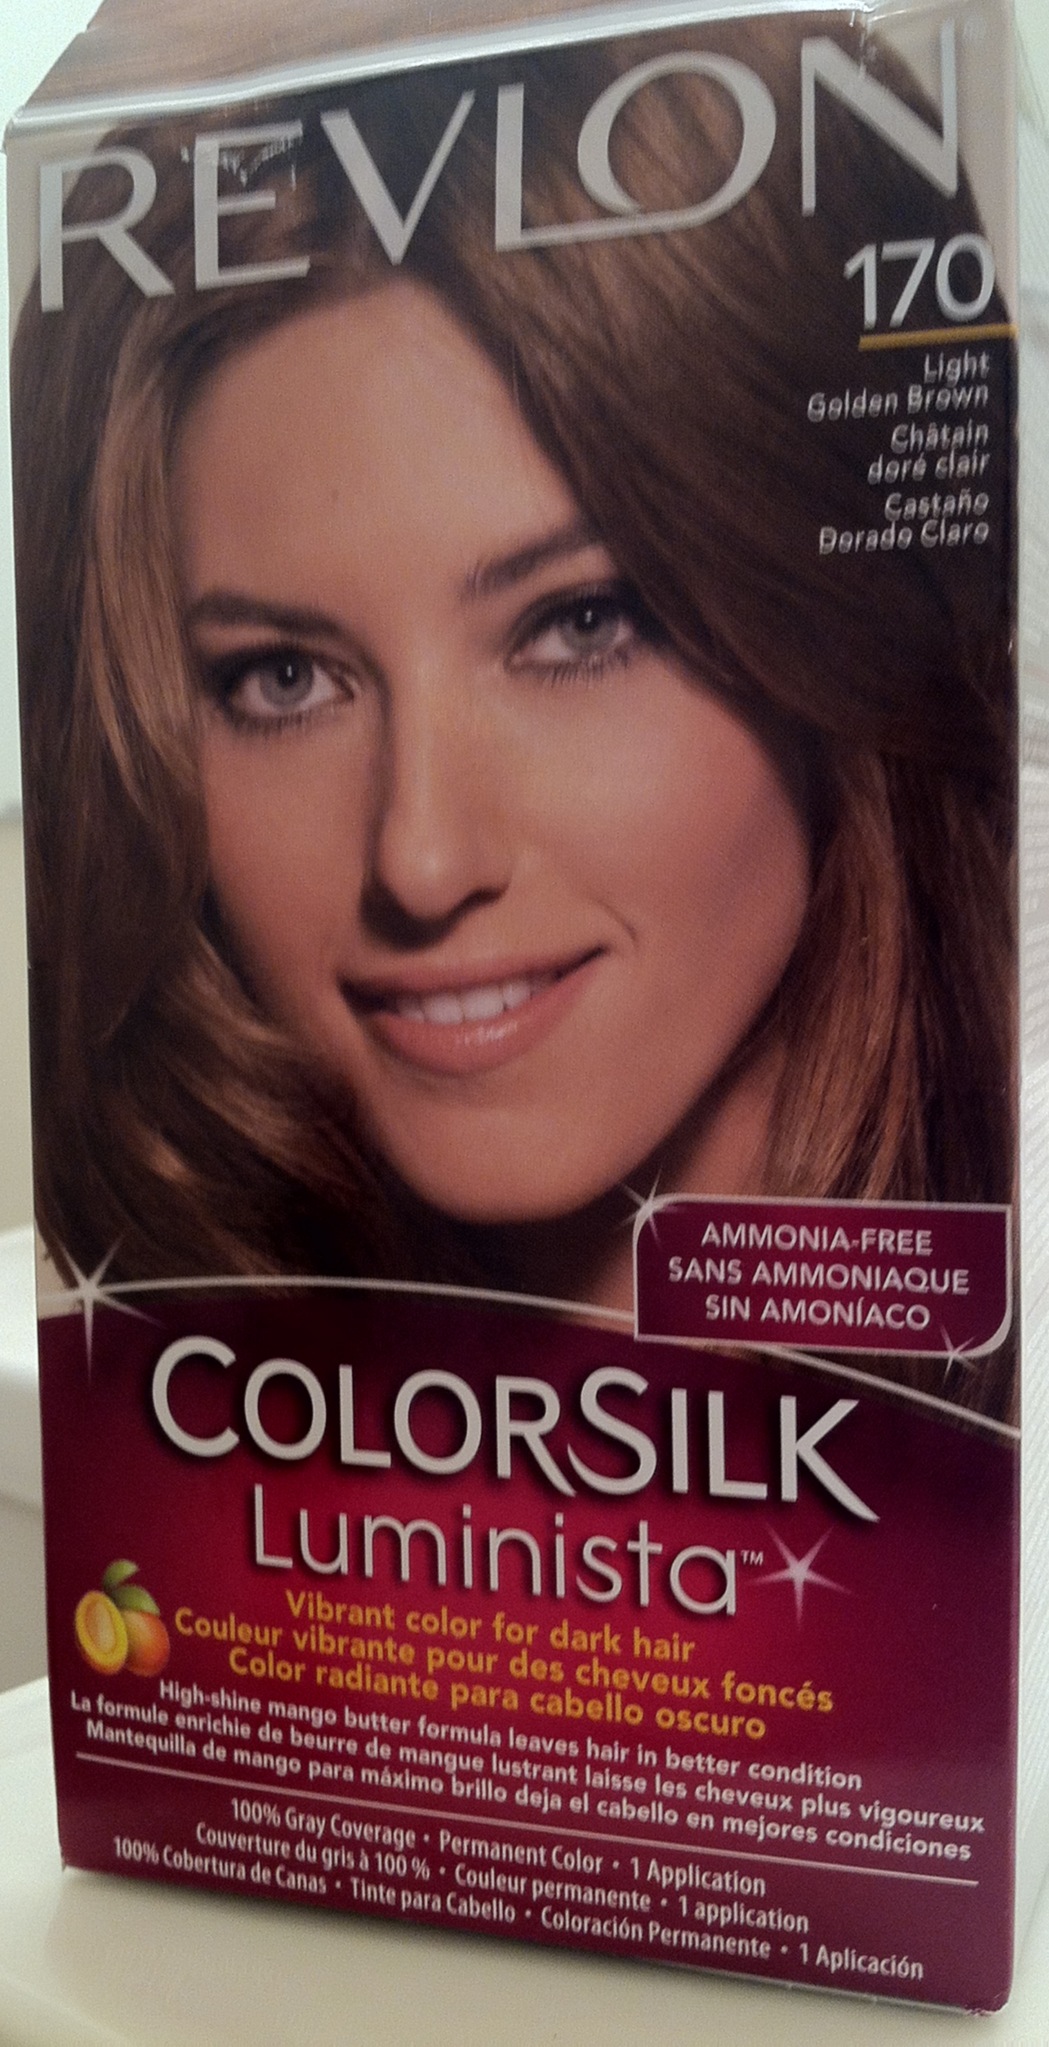 Colorsilk Luminista Vibrant Color For Dark Hair Review Polish